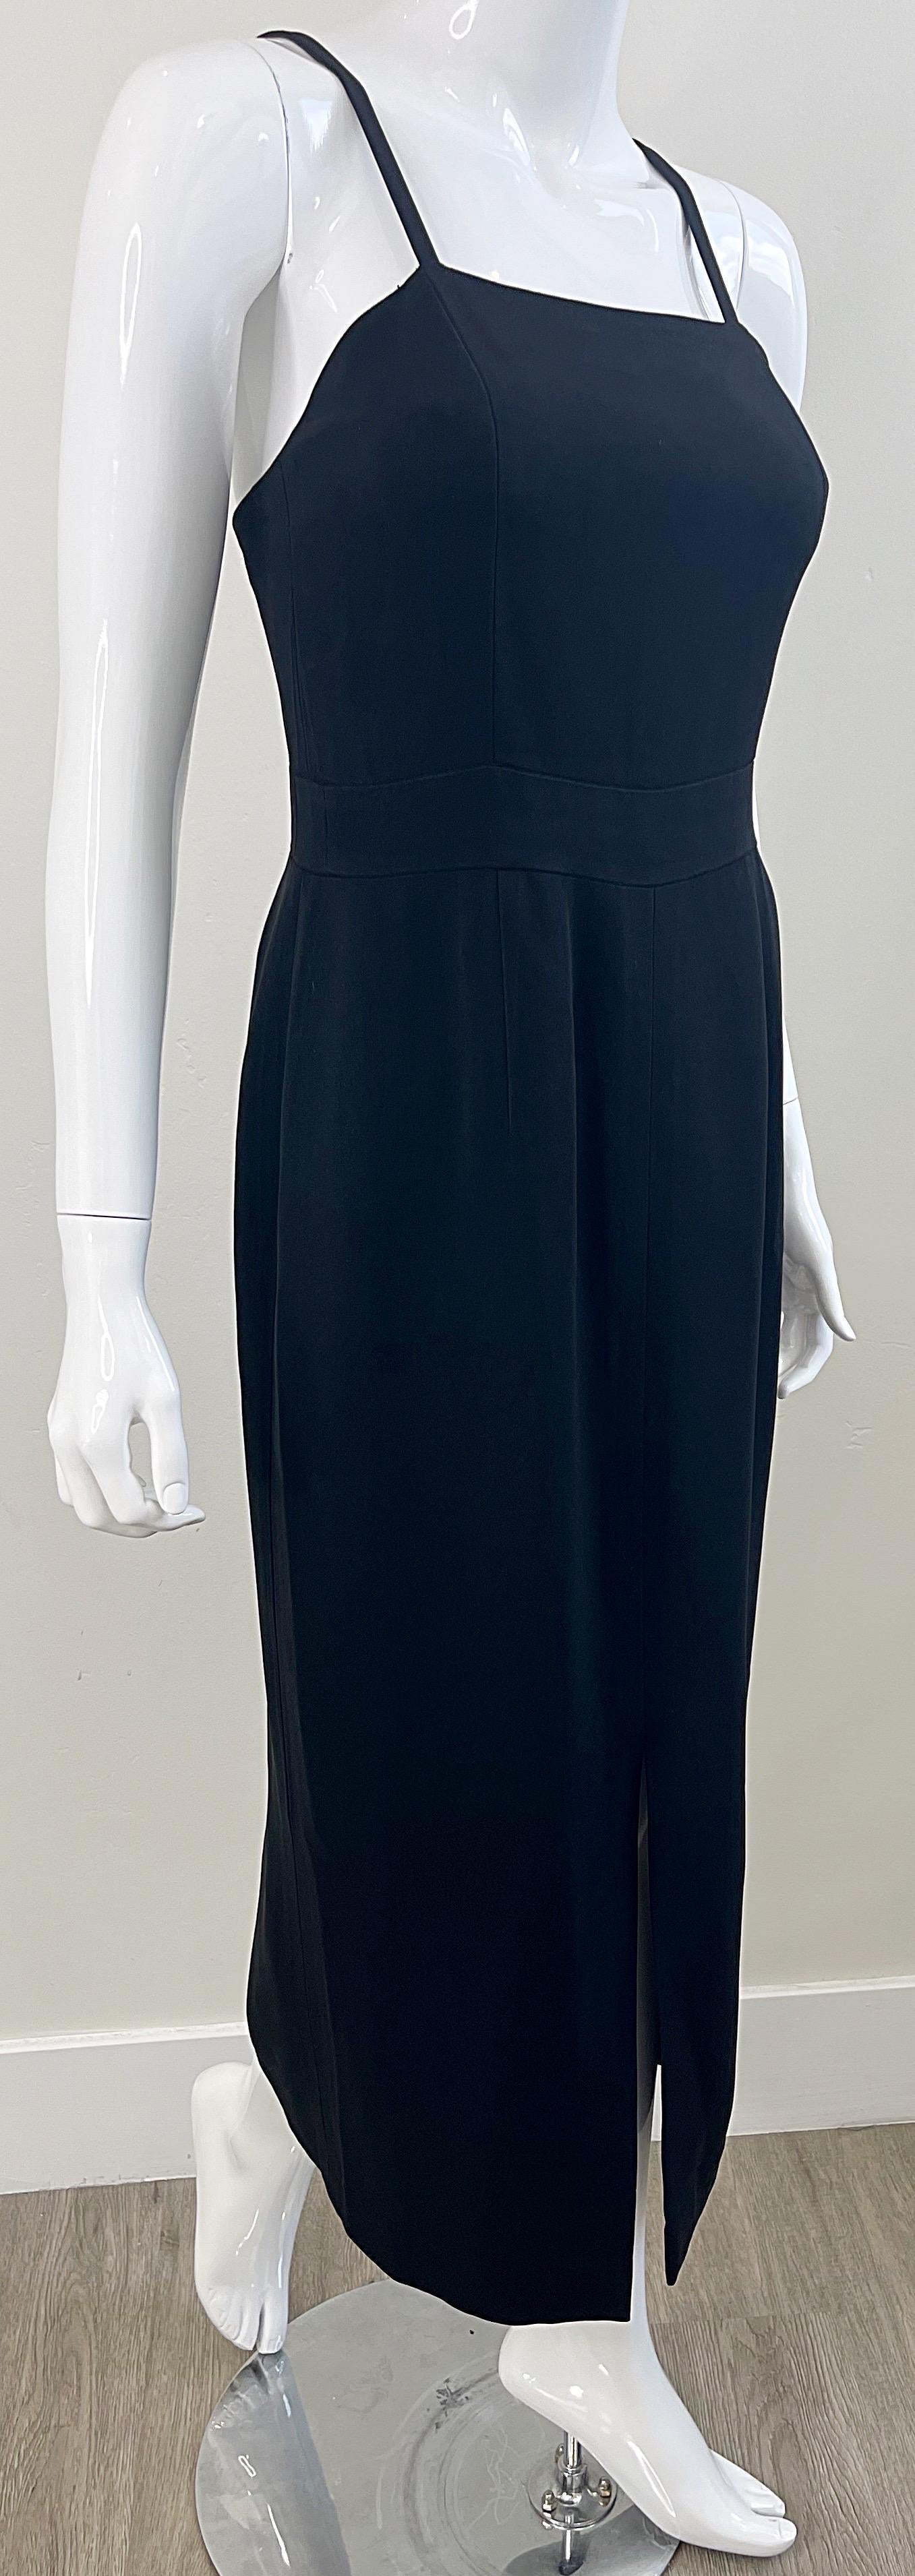 Karl Lagerfeld 1990s Black Sleeveless Timeless Black Vintage 90s Gown Maxi Dress For Sale 4